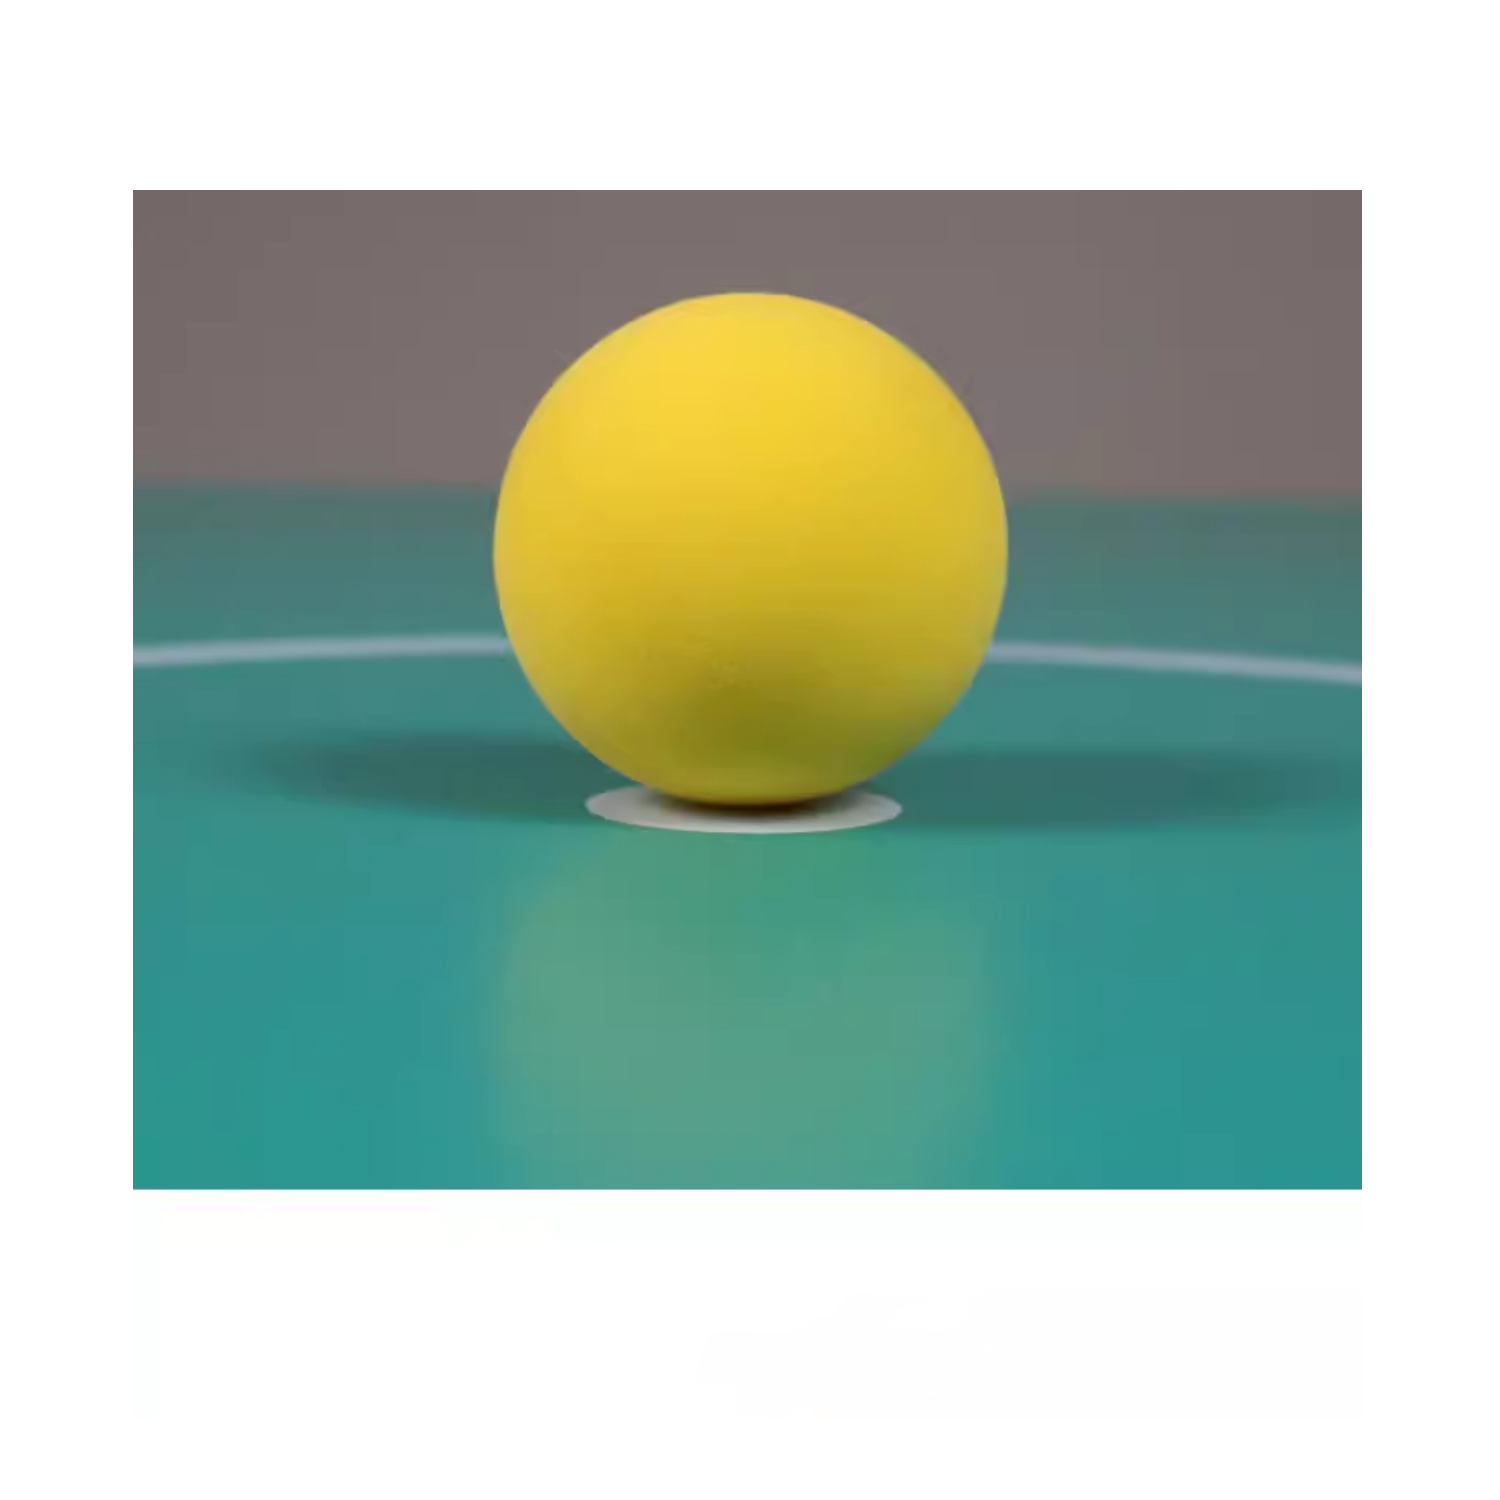 36mm Competition Fossball Balls-2PCS/Set